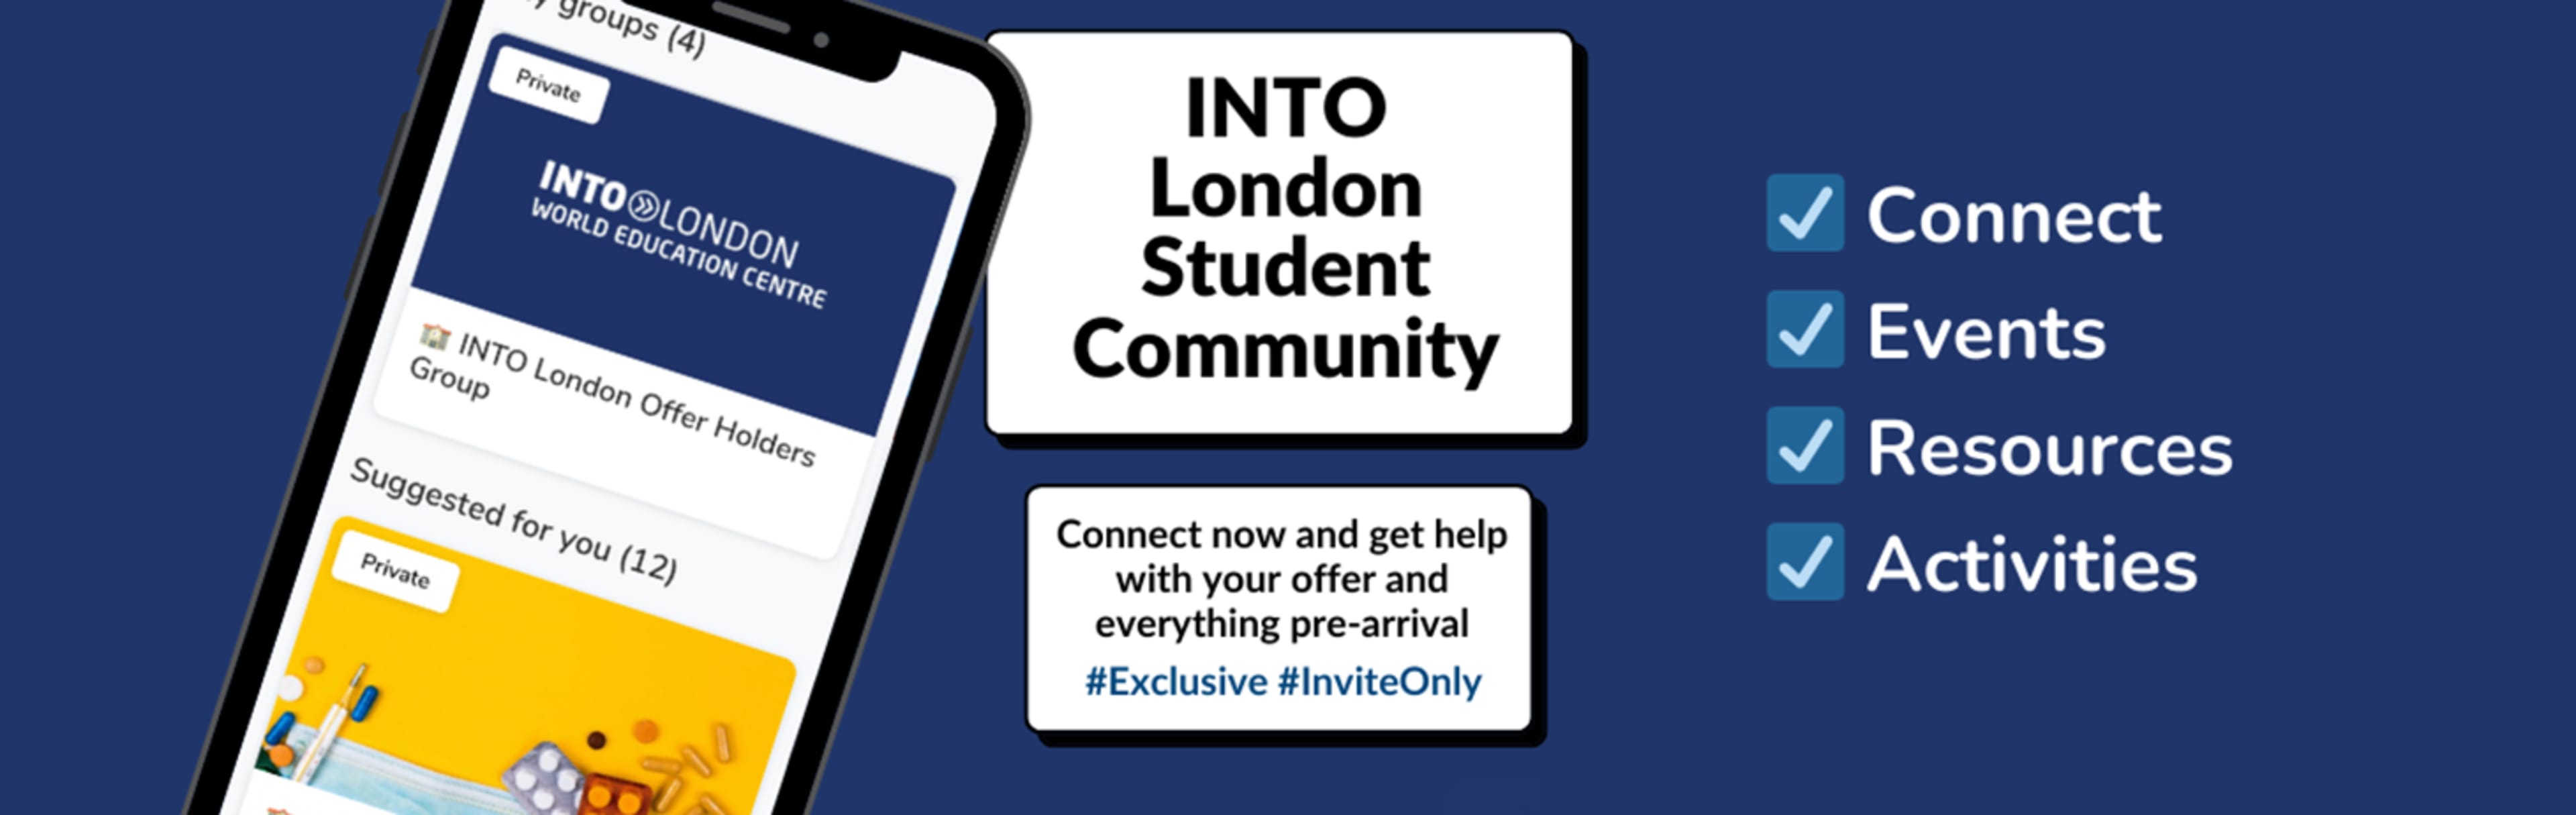 INTO London Student Community